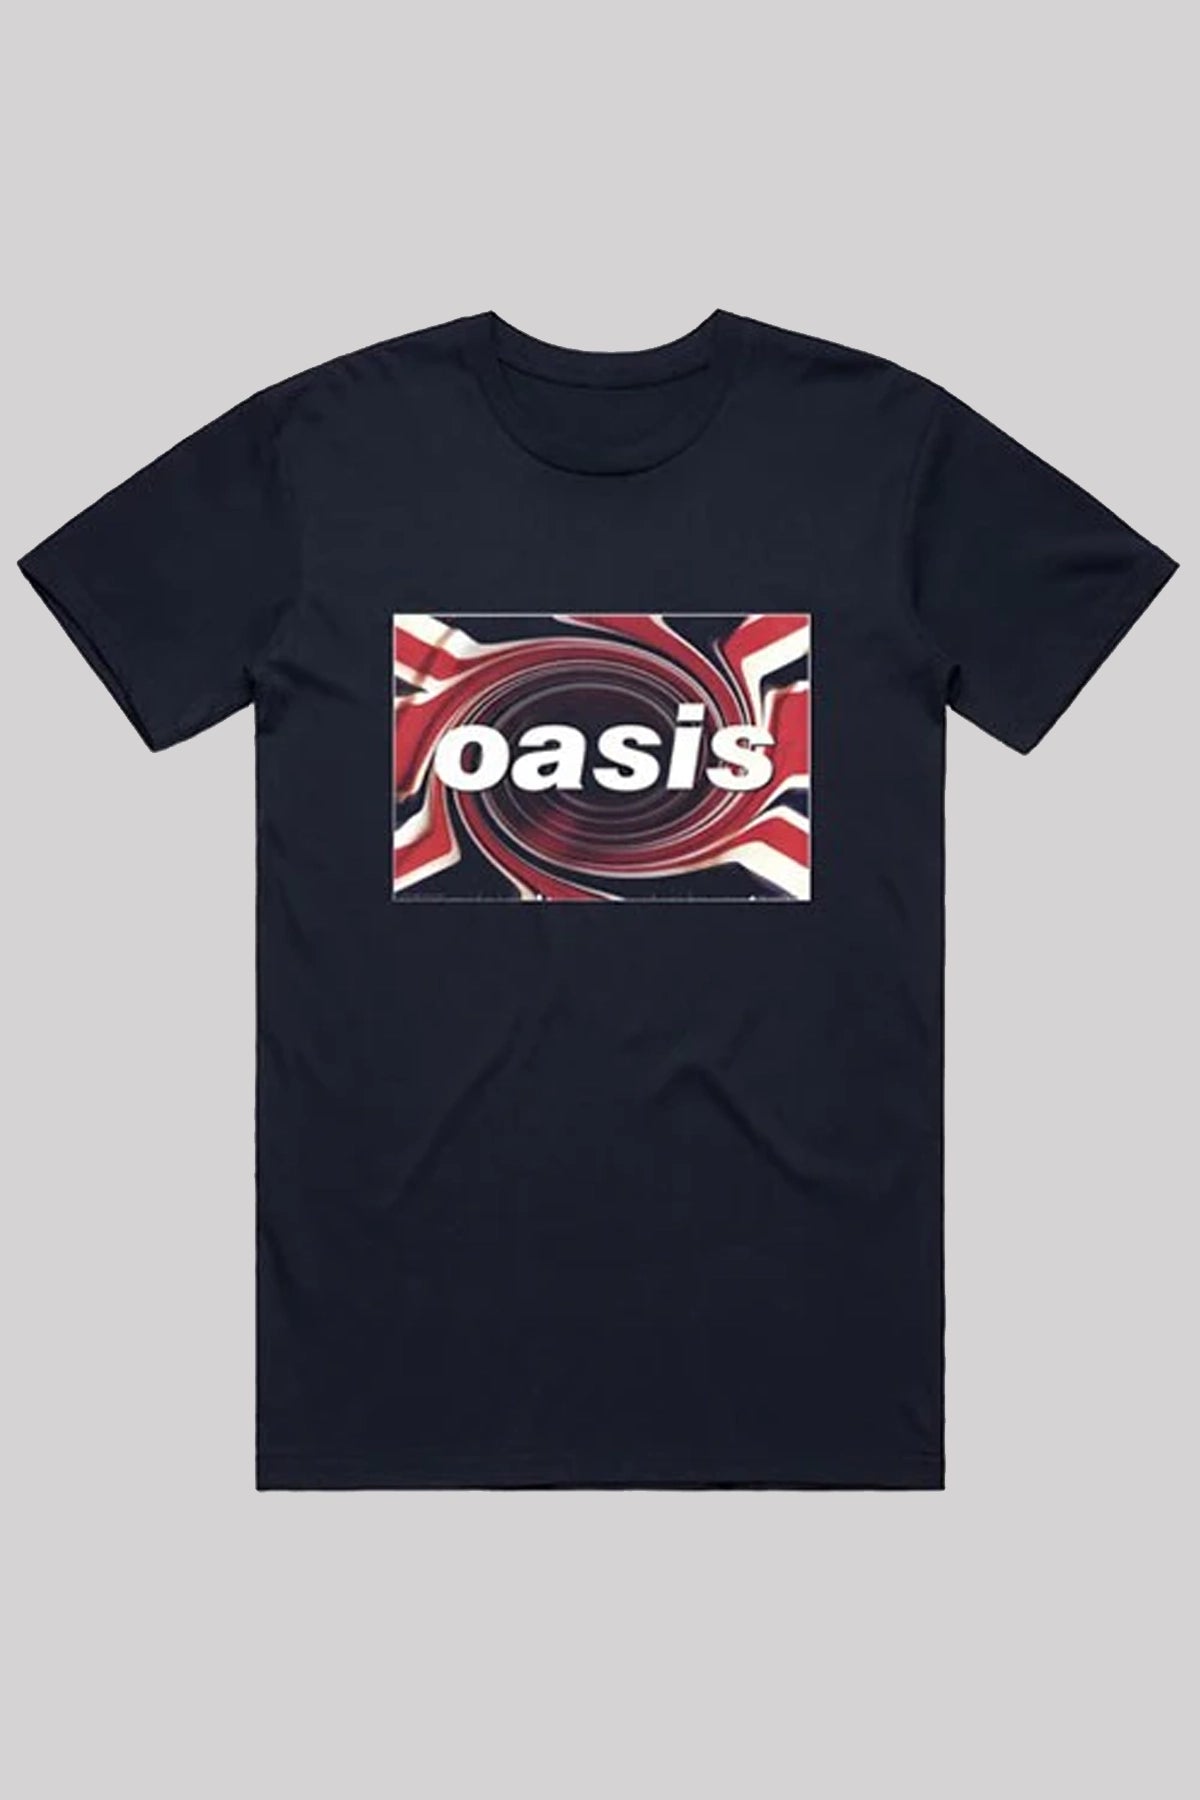 Oasis Union Jack Original Unisex Navy Blue T-Shirt